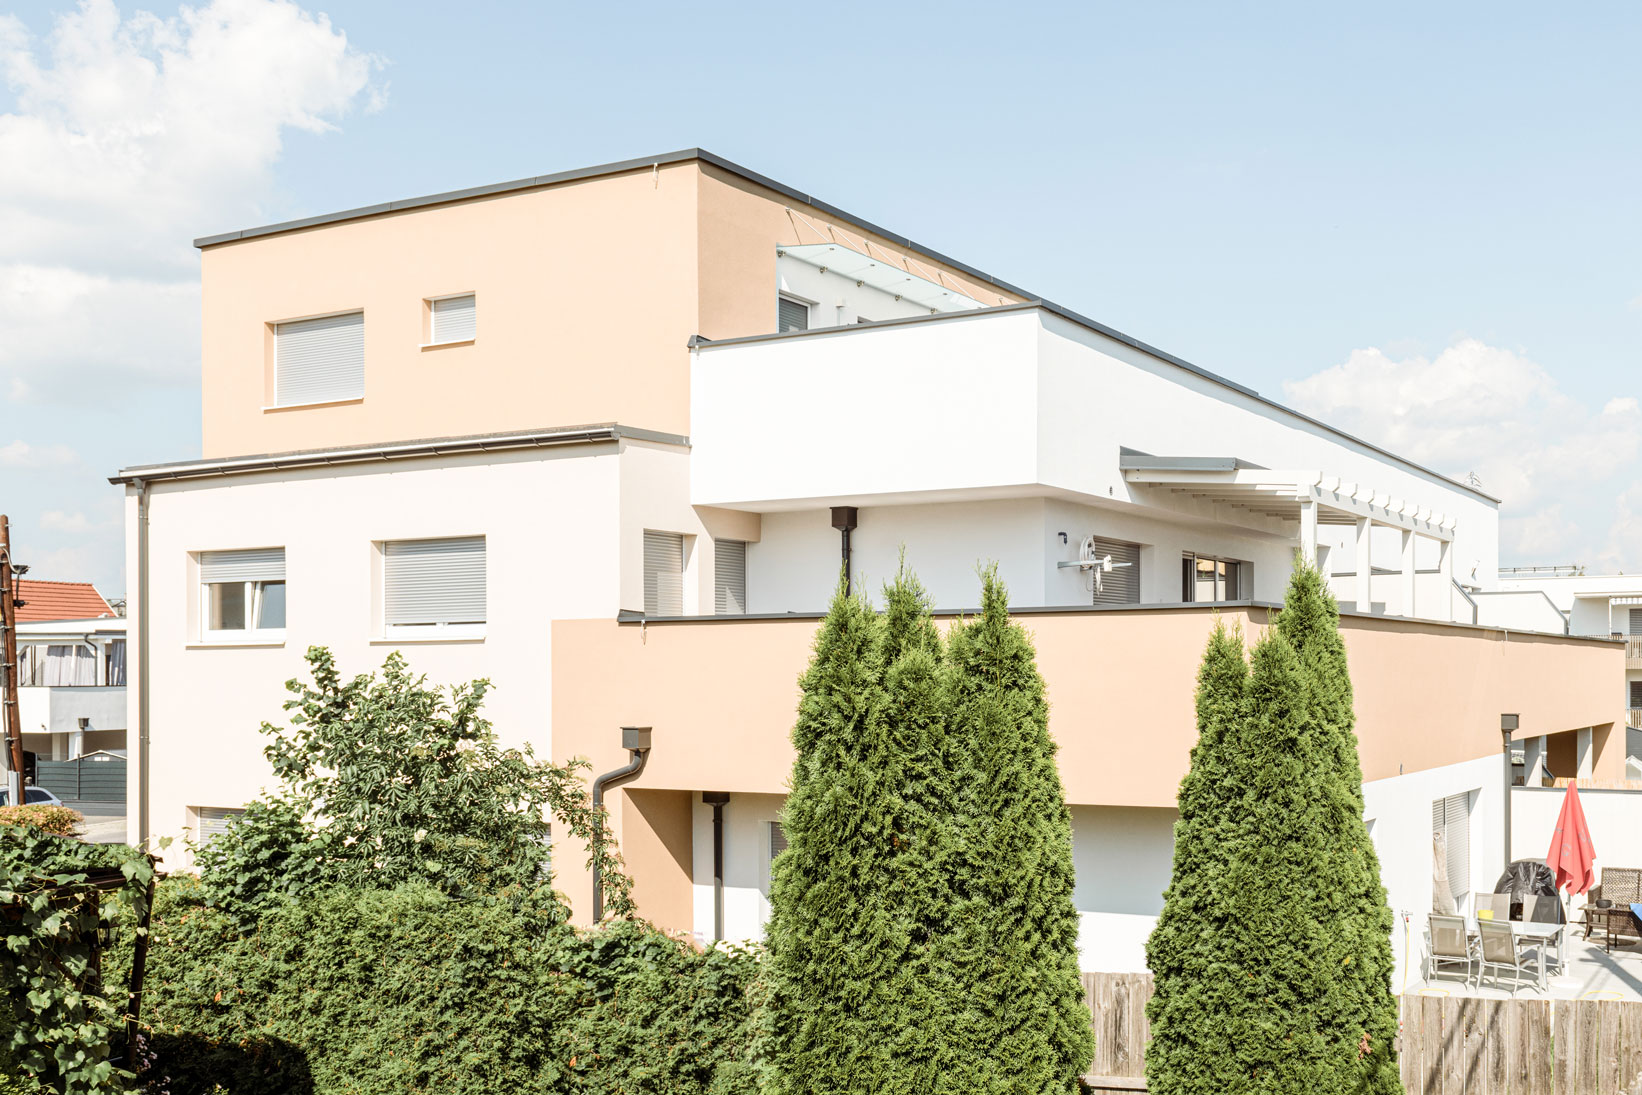 Apartment, Austria, Schwarzer Weg 18, Graz, Brickwise